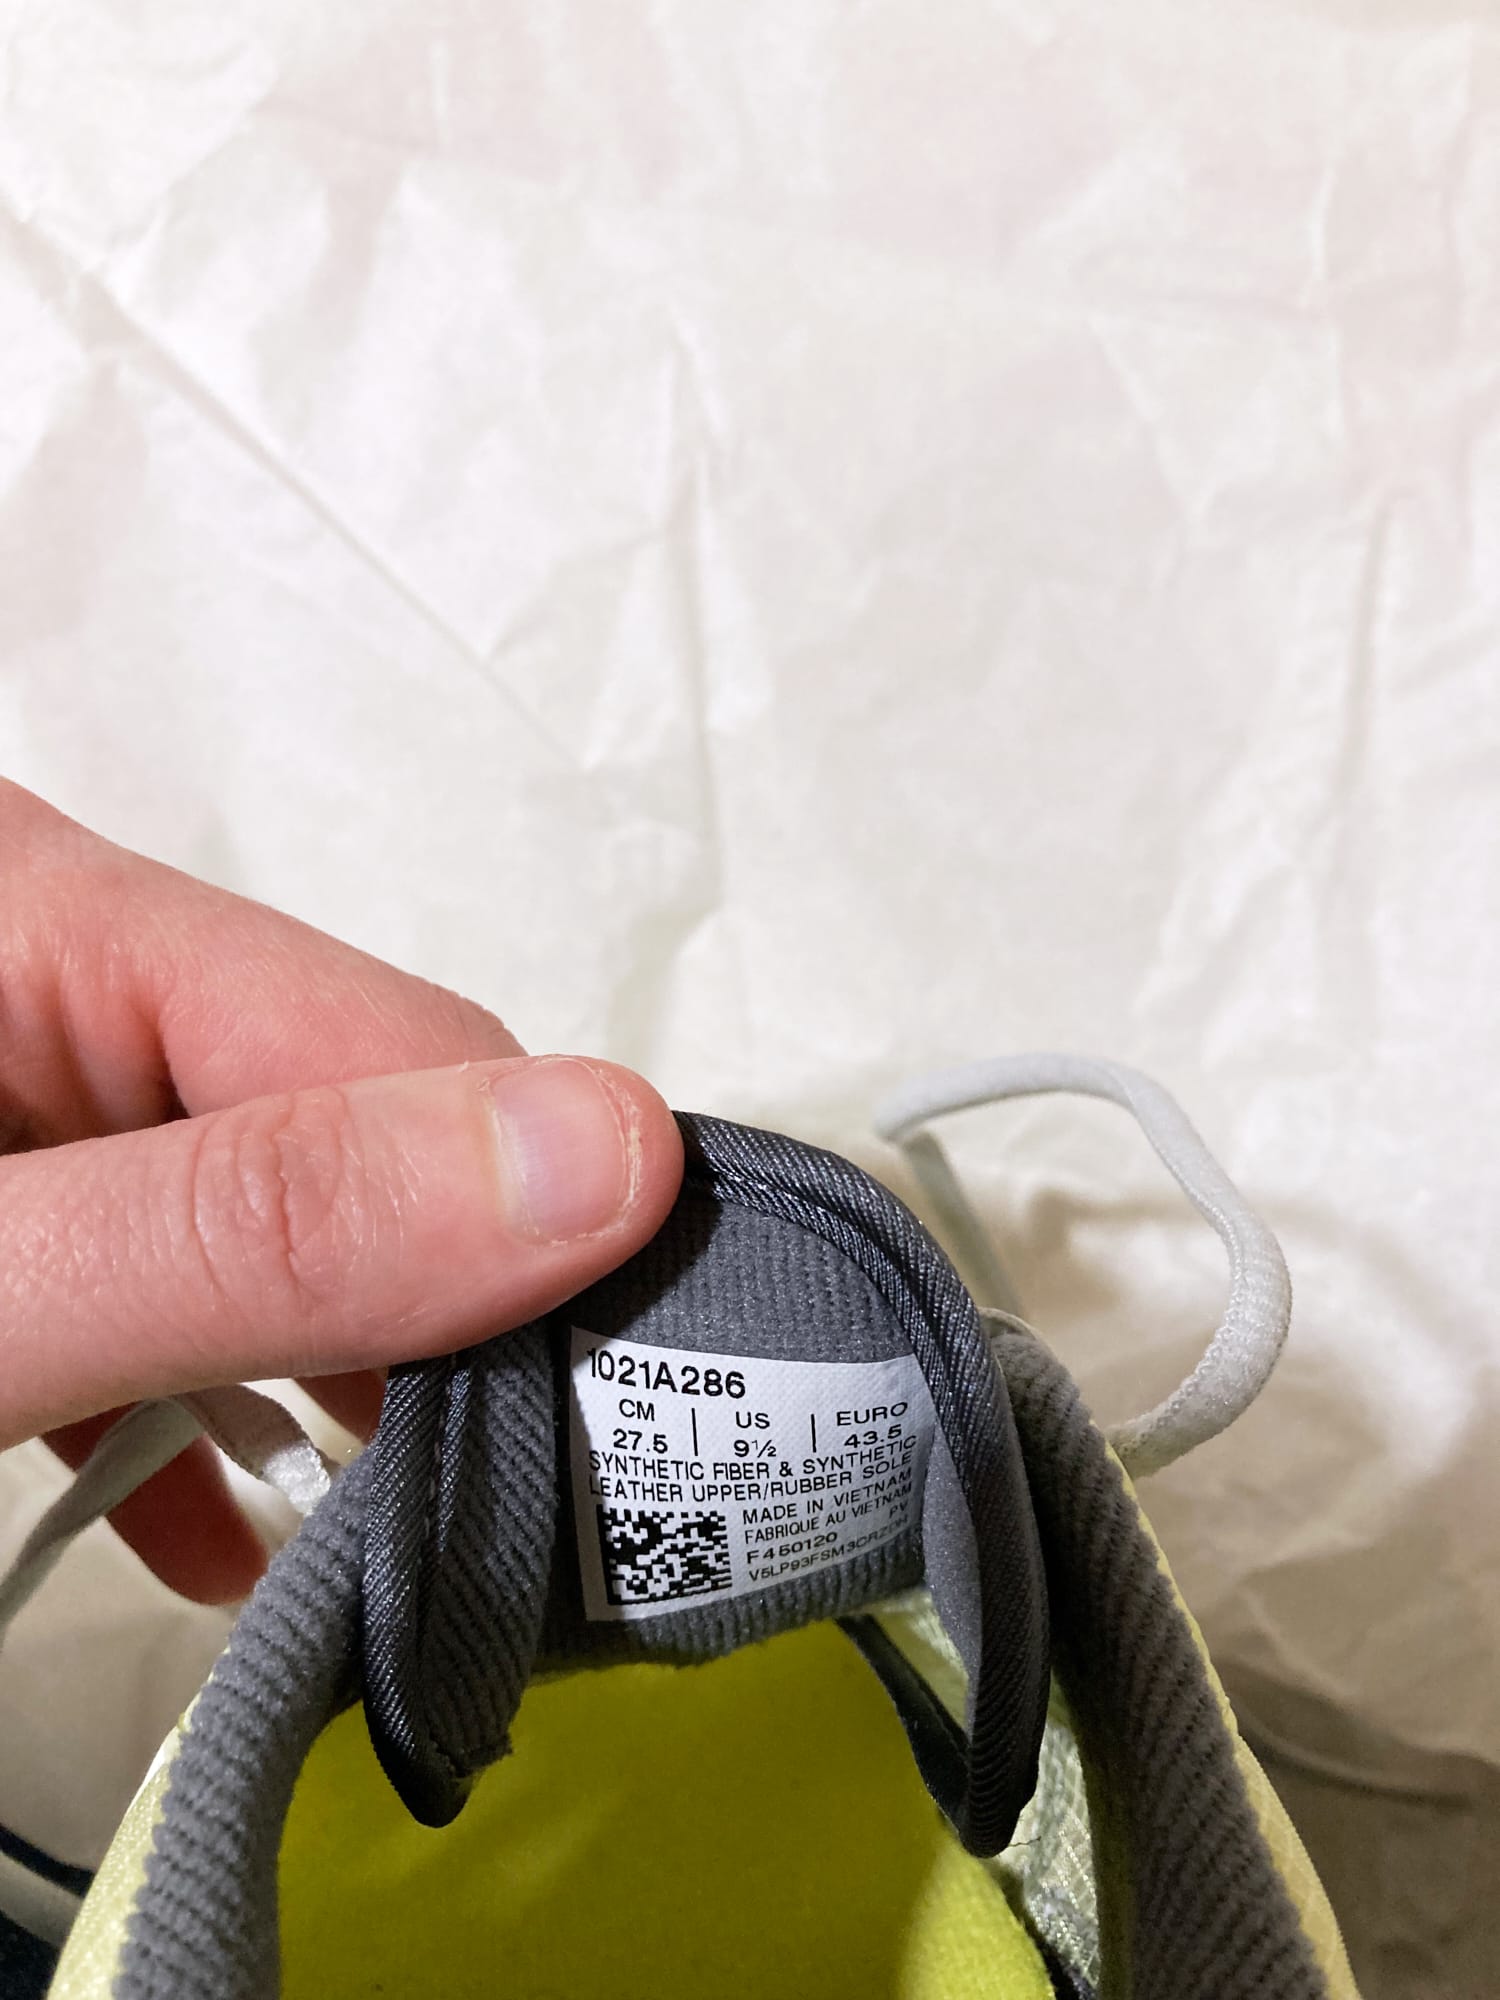 Asics Gel-Kinsei OG Huddle Yellow sneakers - US mens size 9.5 EU 43.5